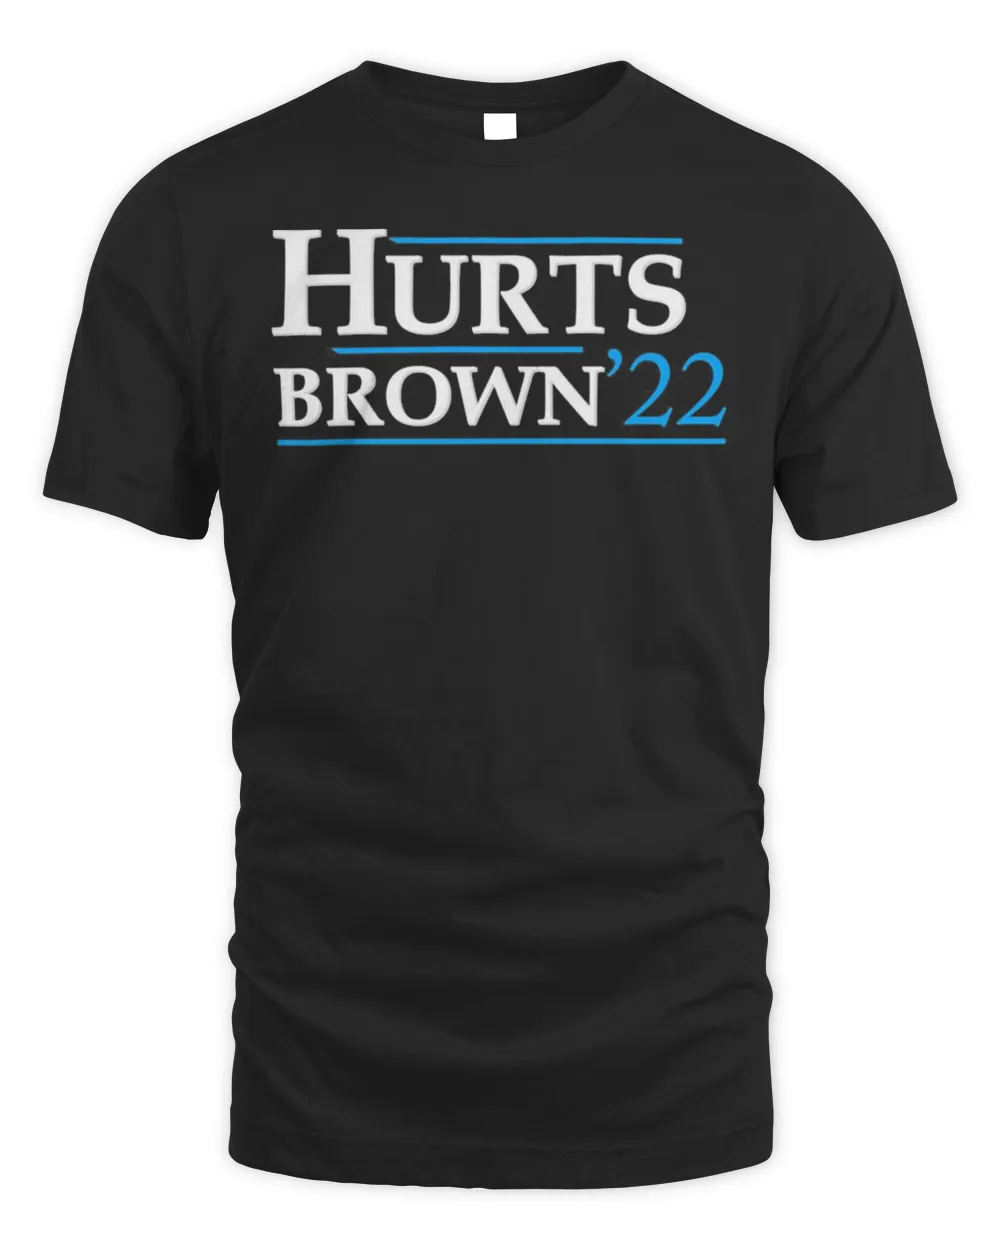 Hurts brown 22 shirt